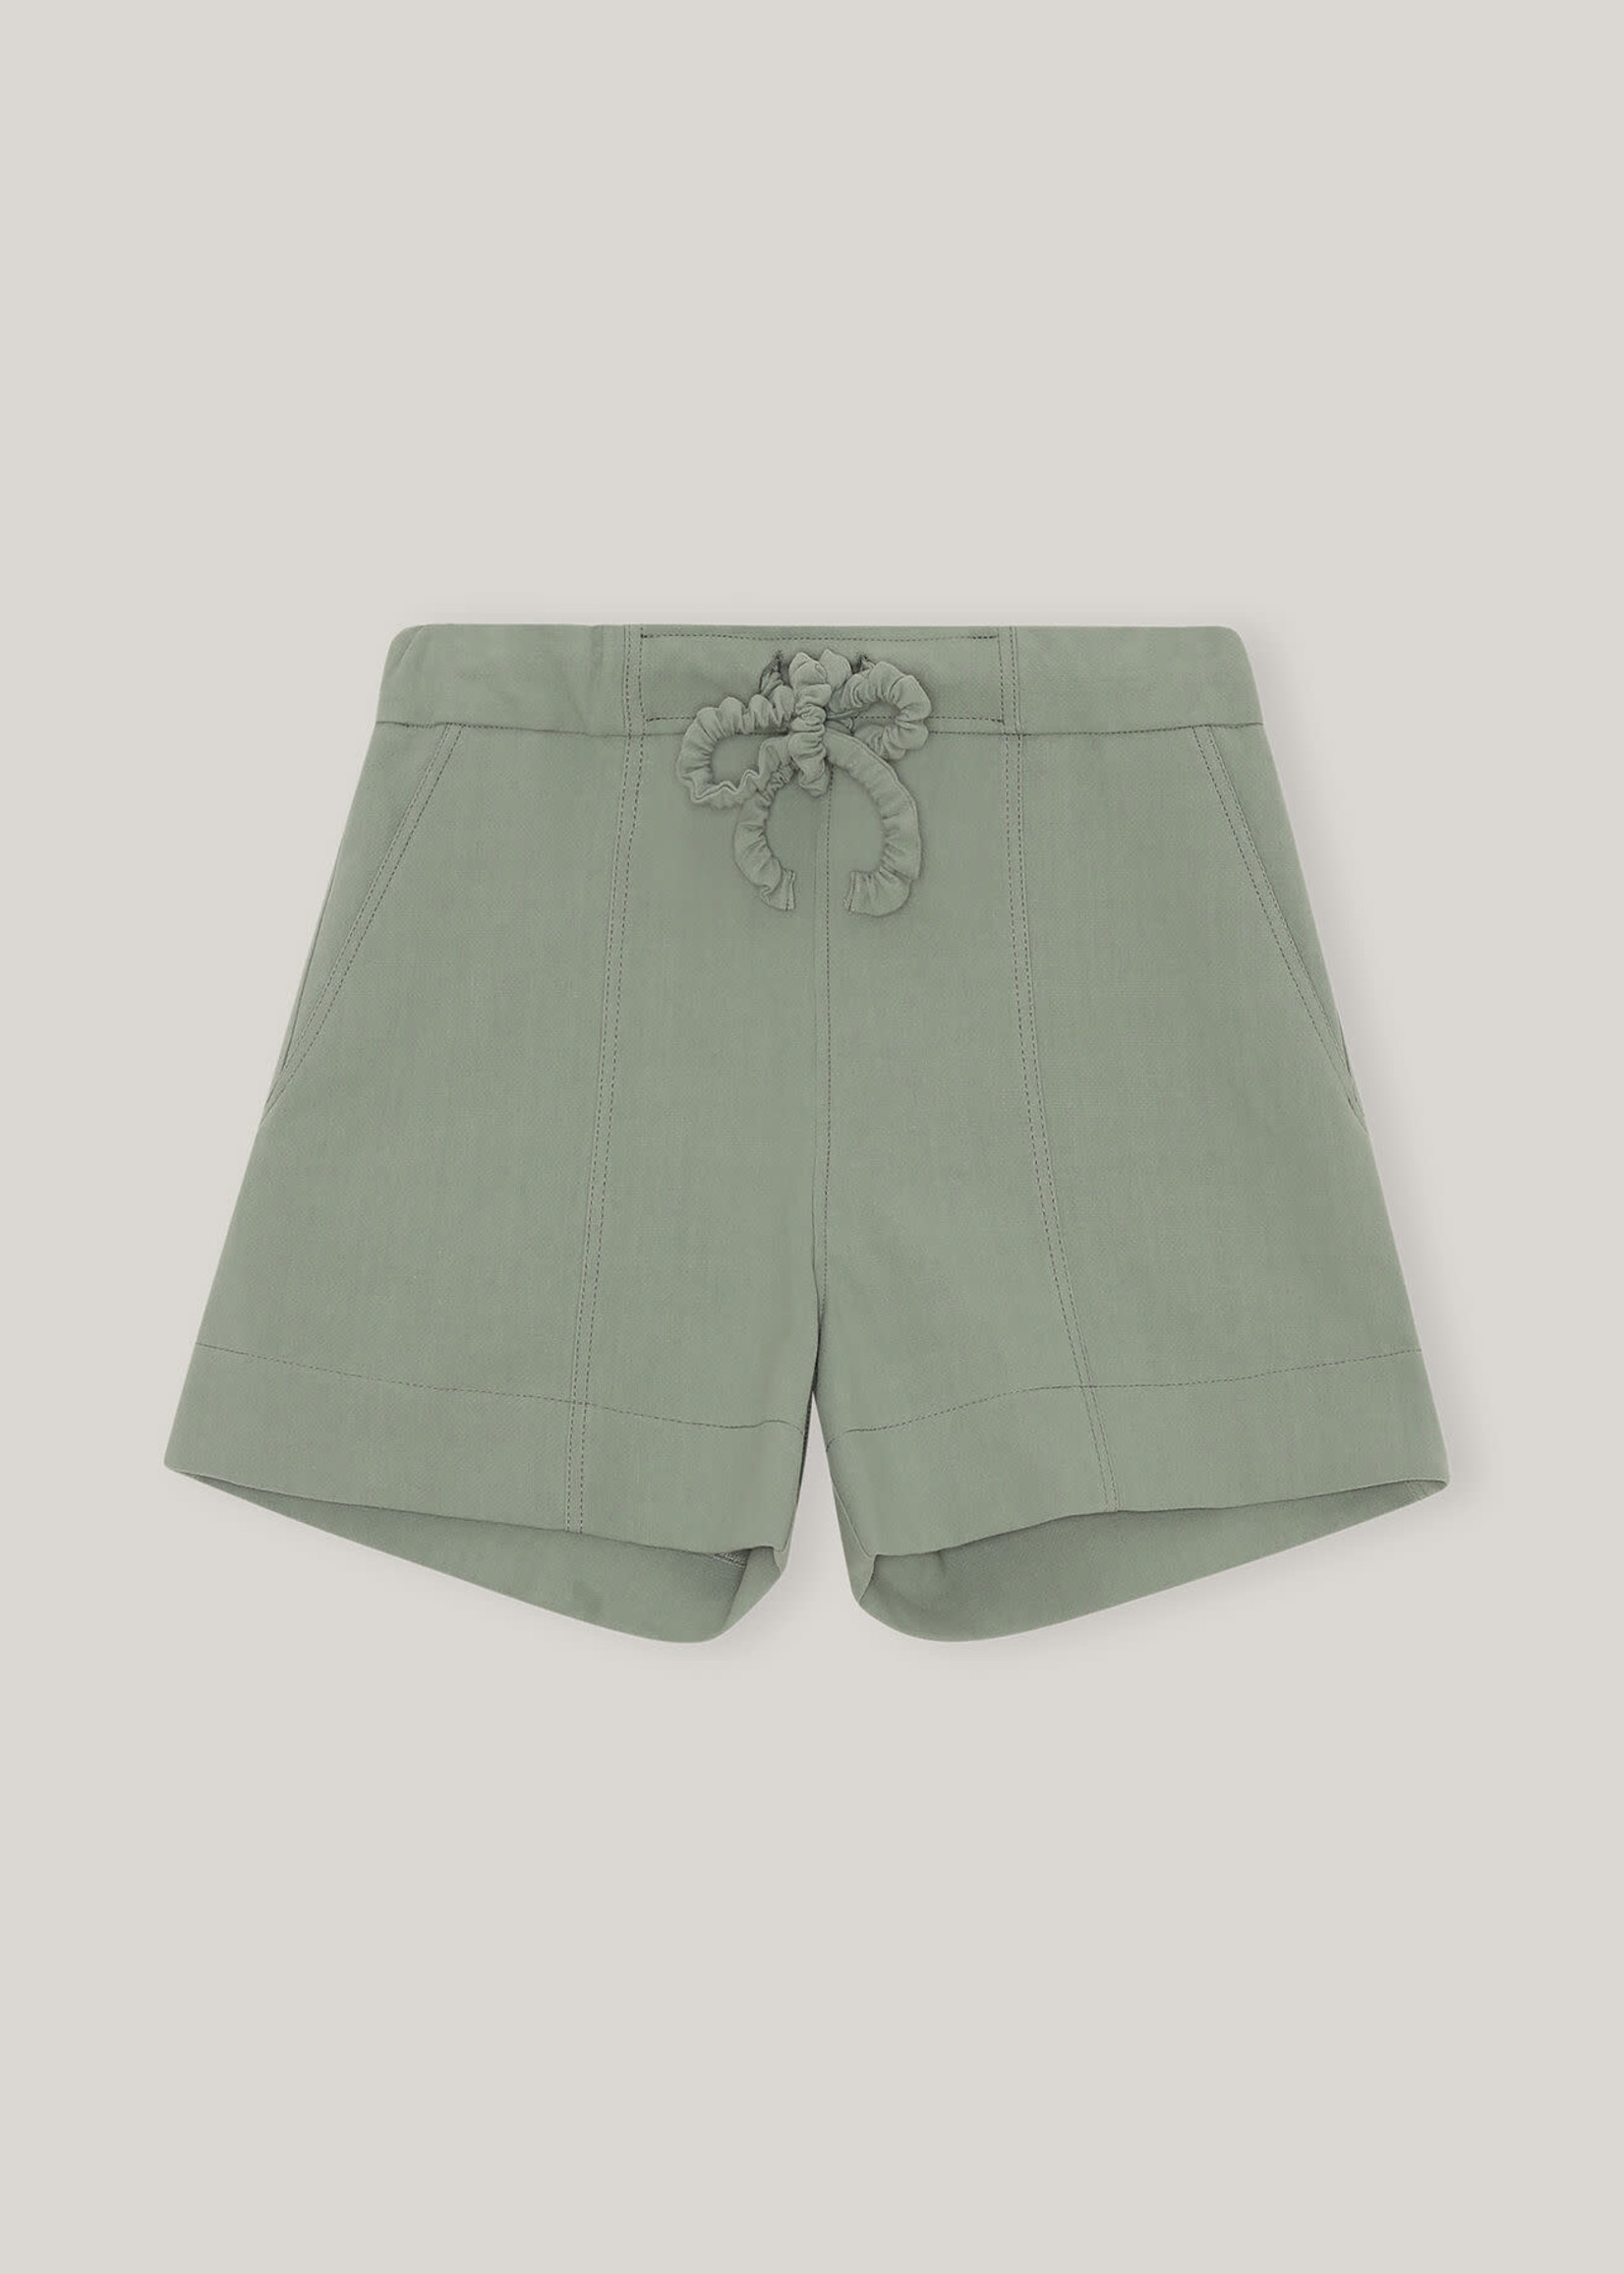 GANNI Drawstring Suiting Shorts in Green Bay